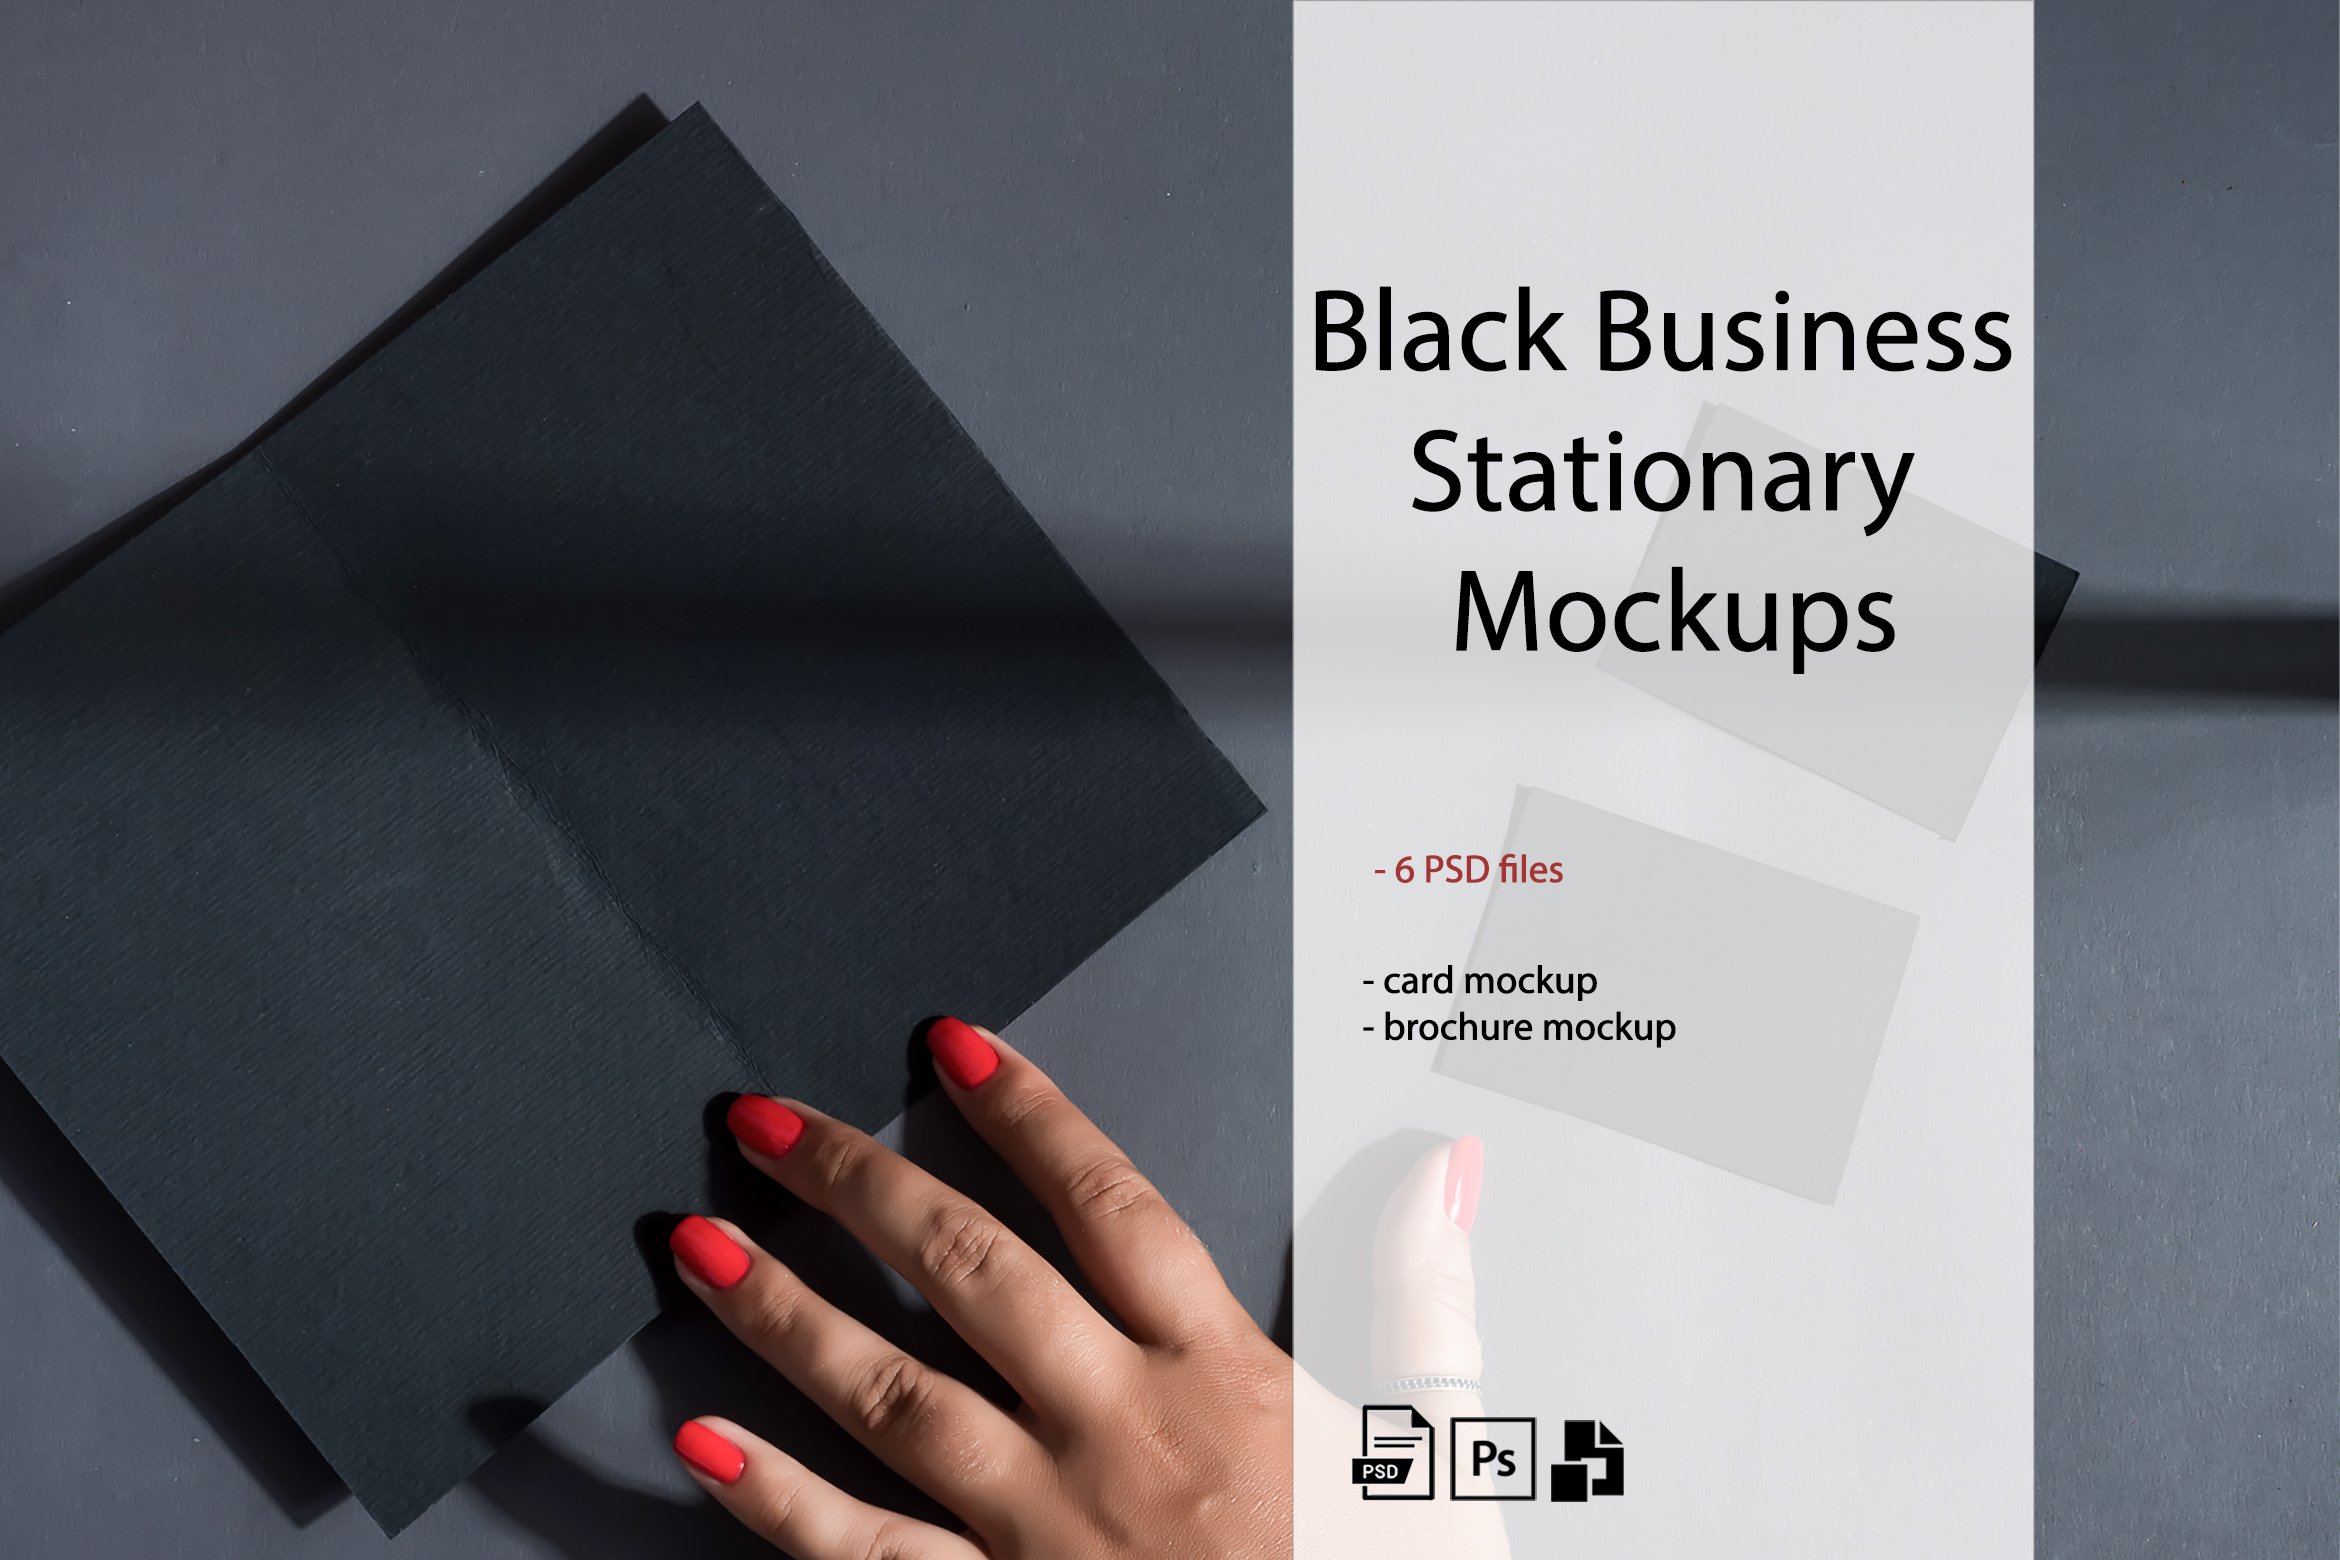 Black Business Stationary Mockups cover image.